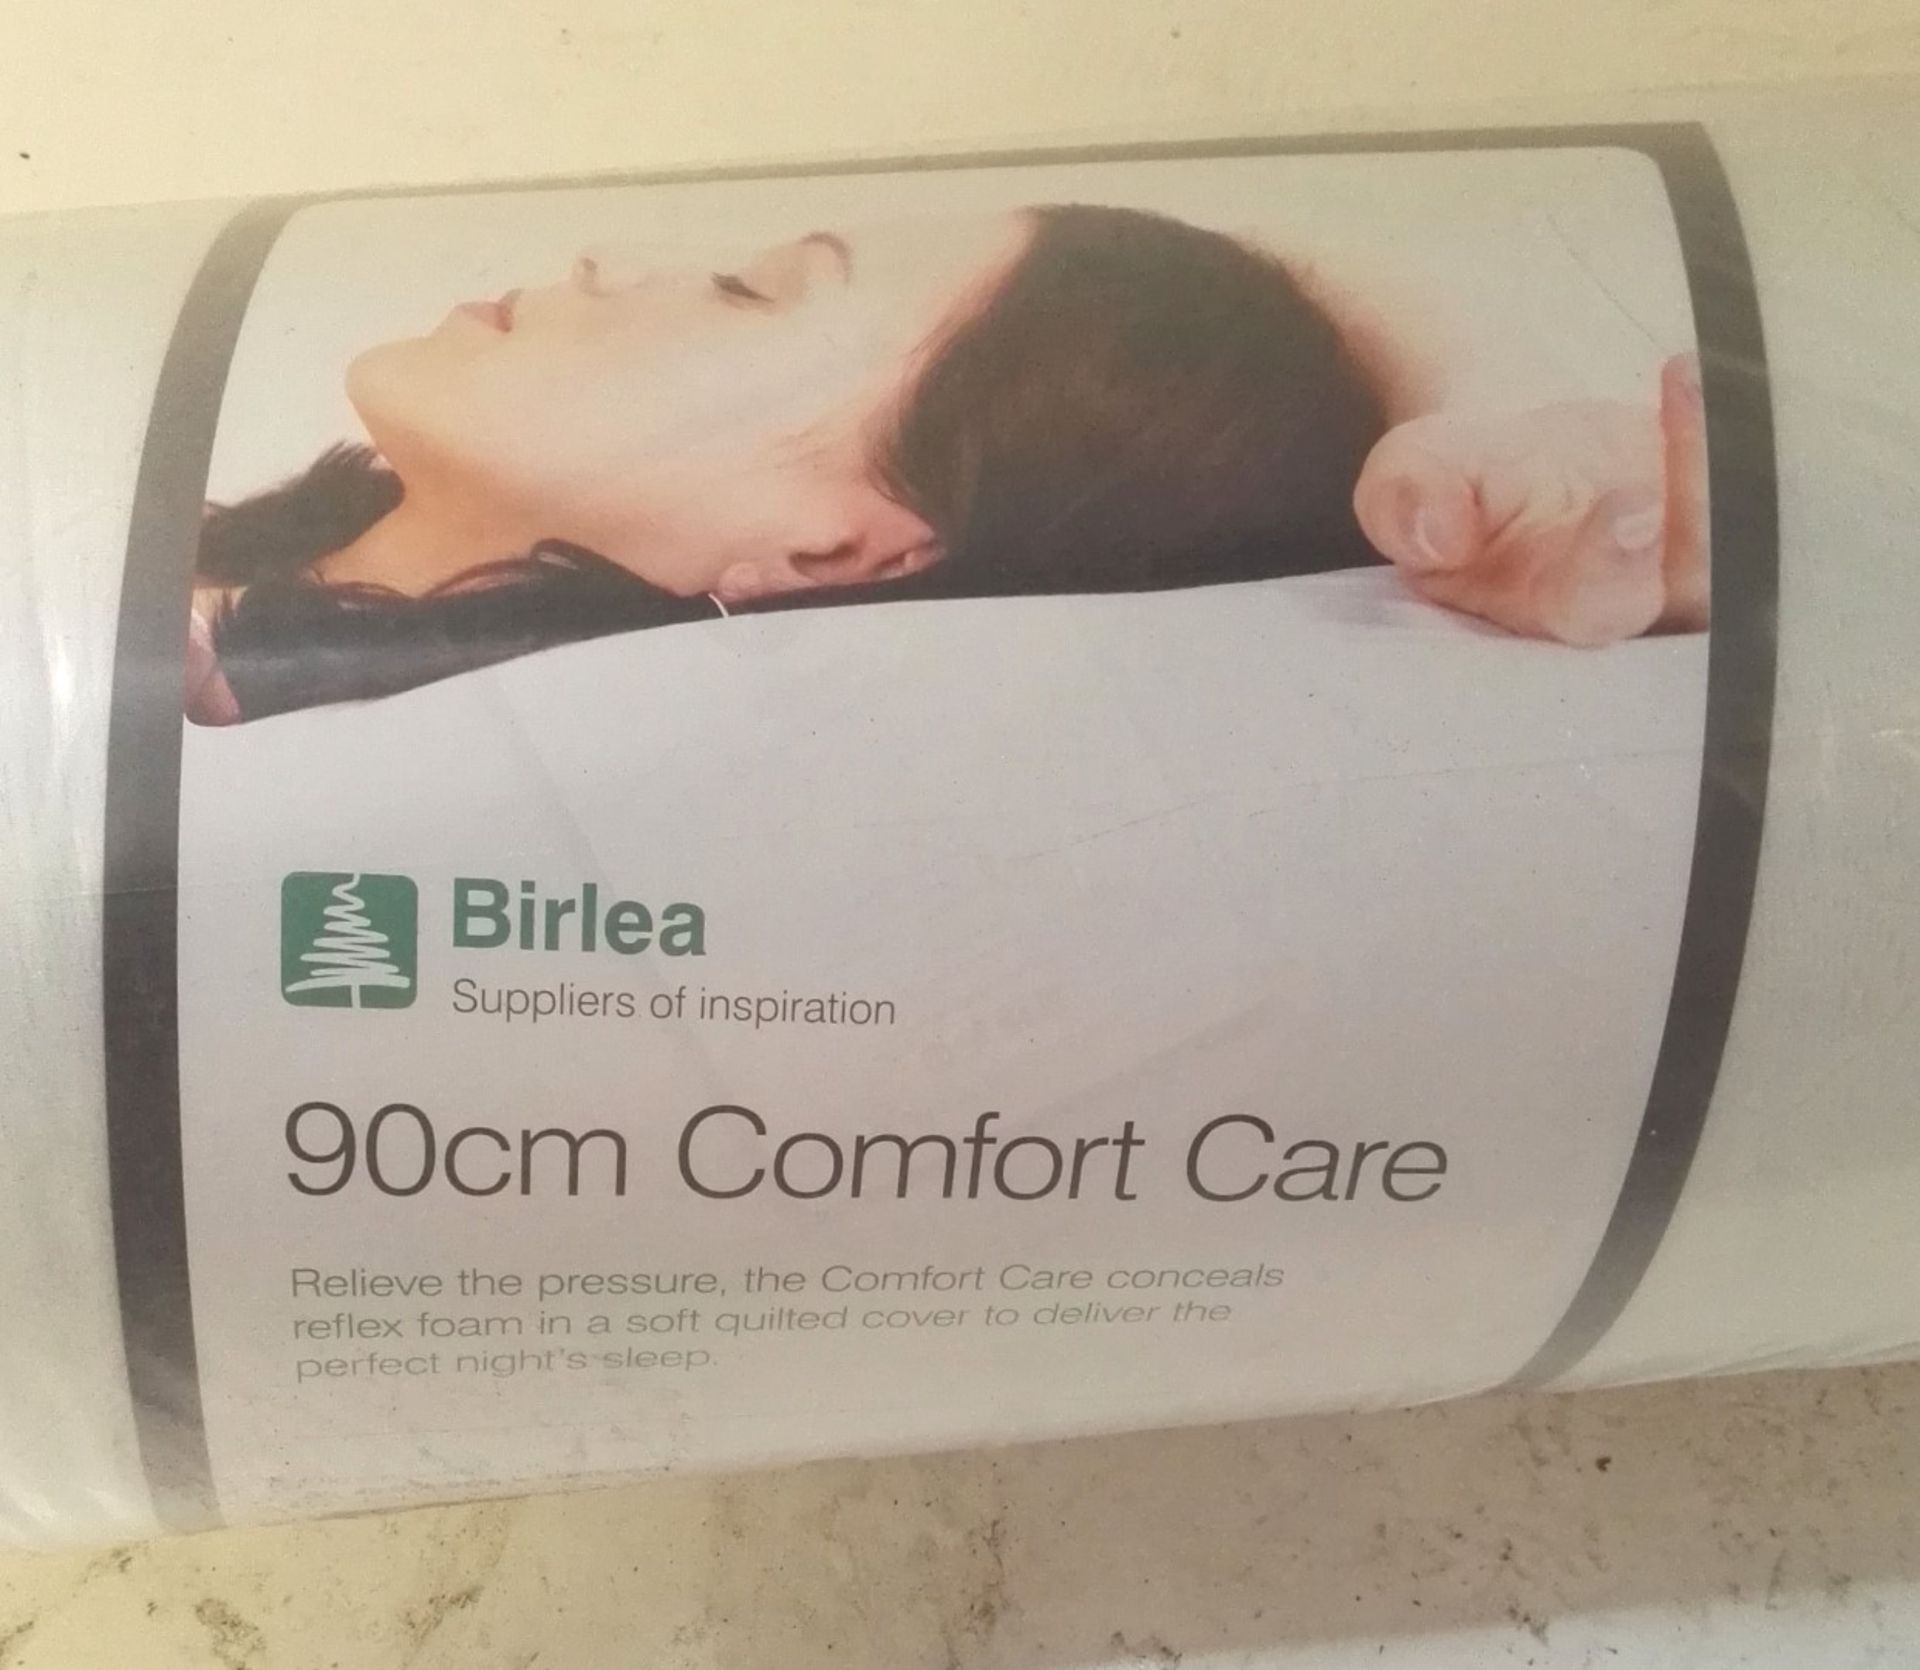 1 x Birlea 90cm Comfort Care Firm Rolled Up Reflex Foam Mattress - Brand New Stock - CL286 - - Image 2 of 6